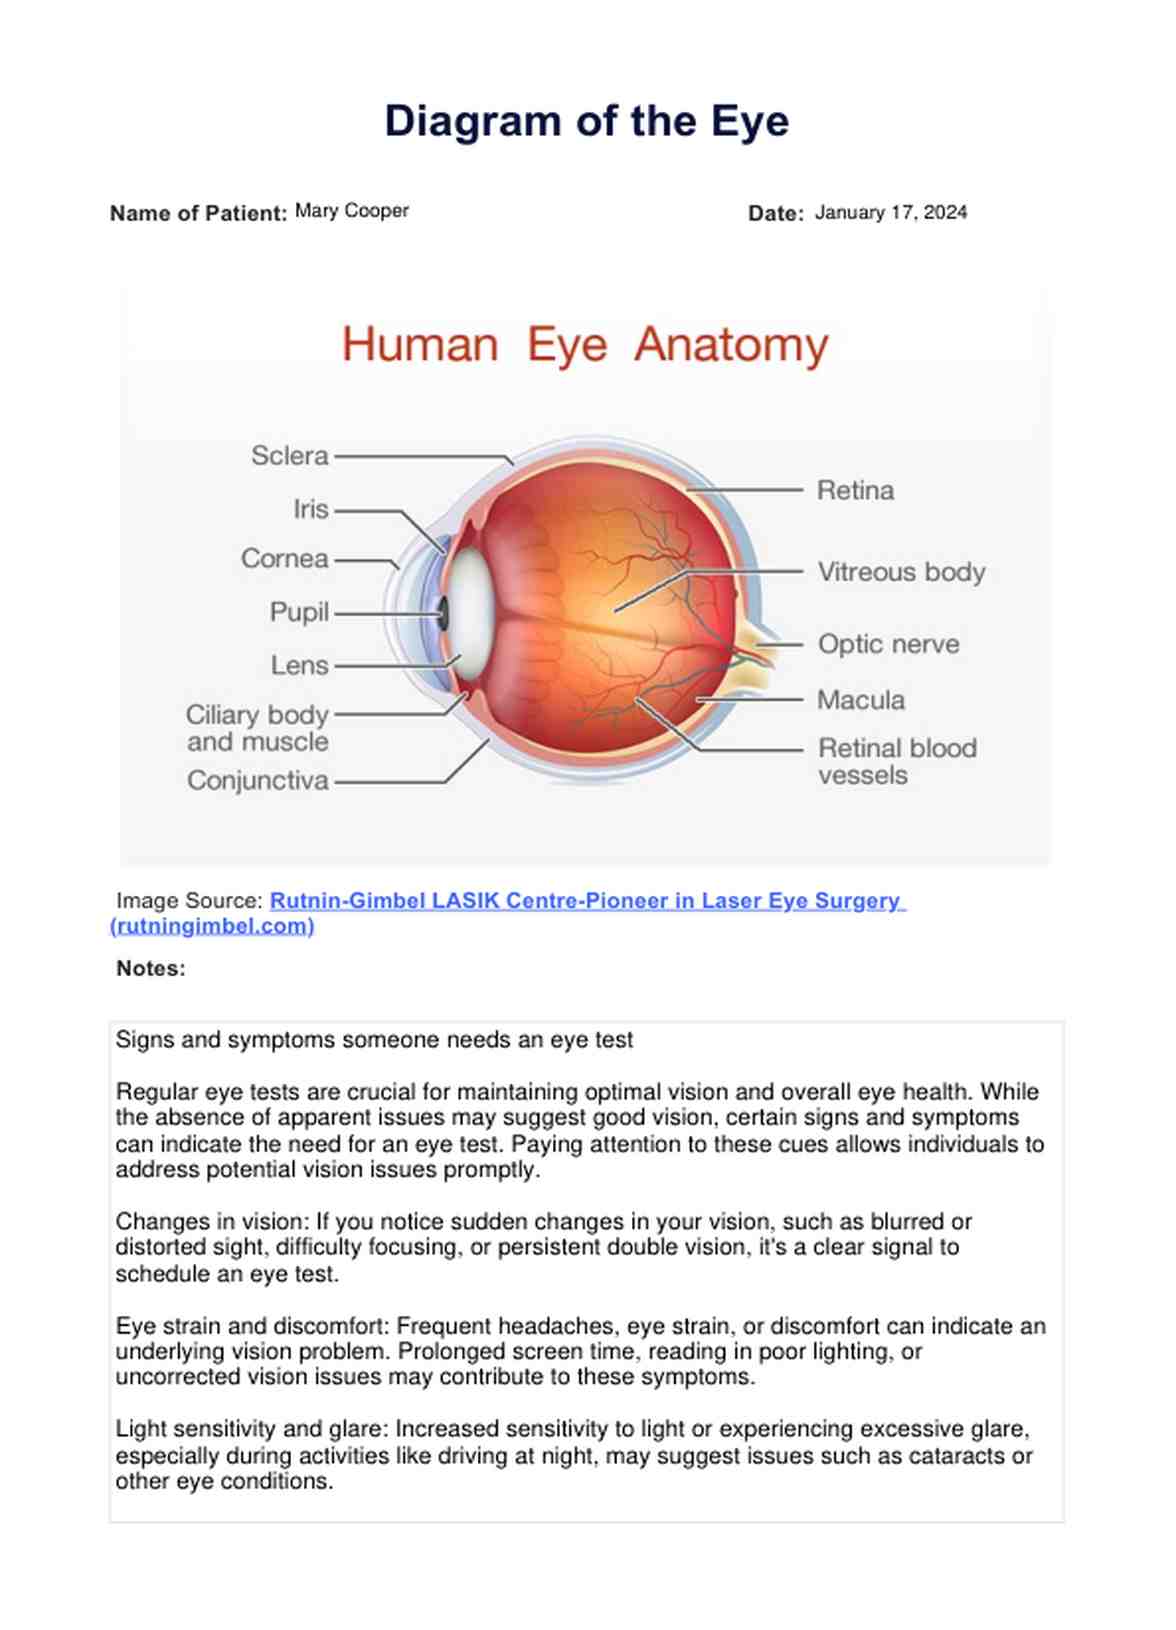 Diagram of the Eye PDF Example